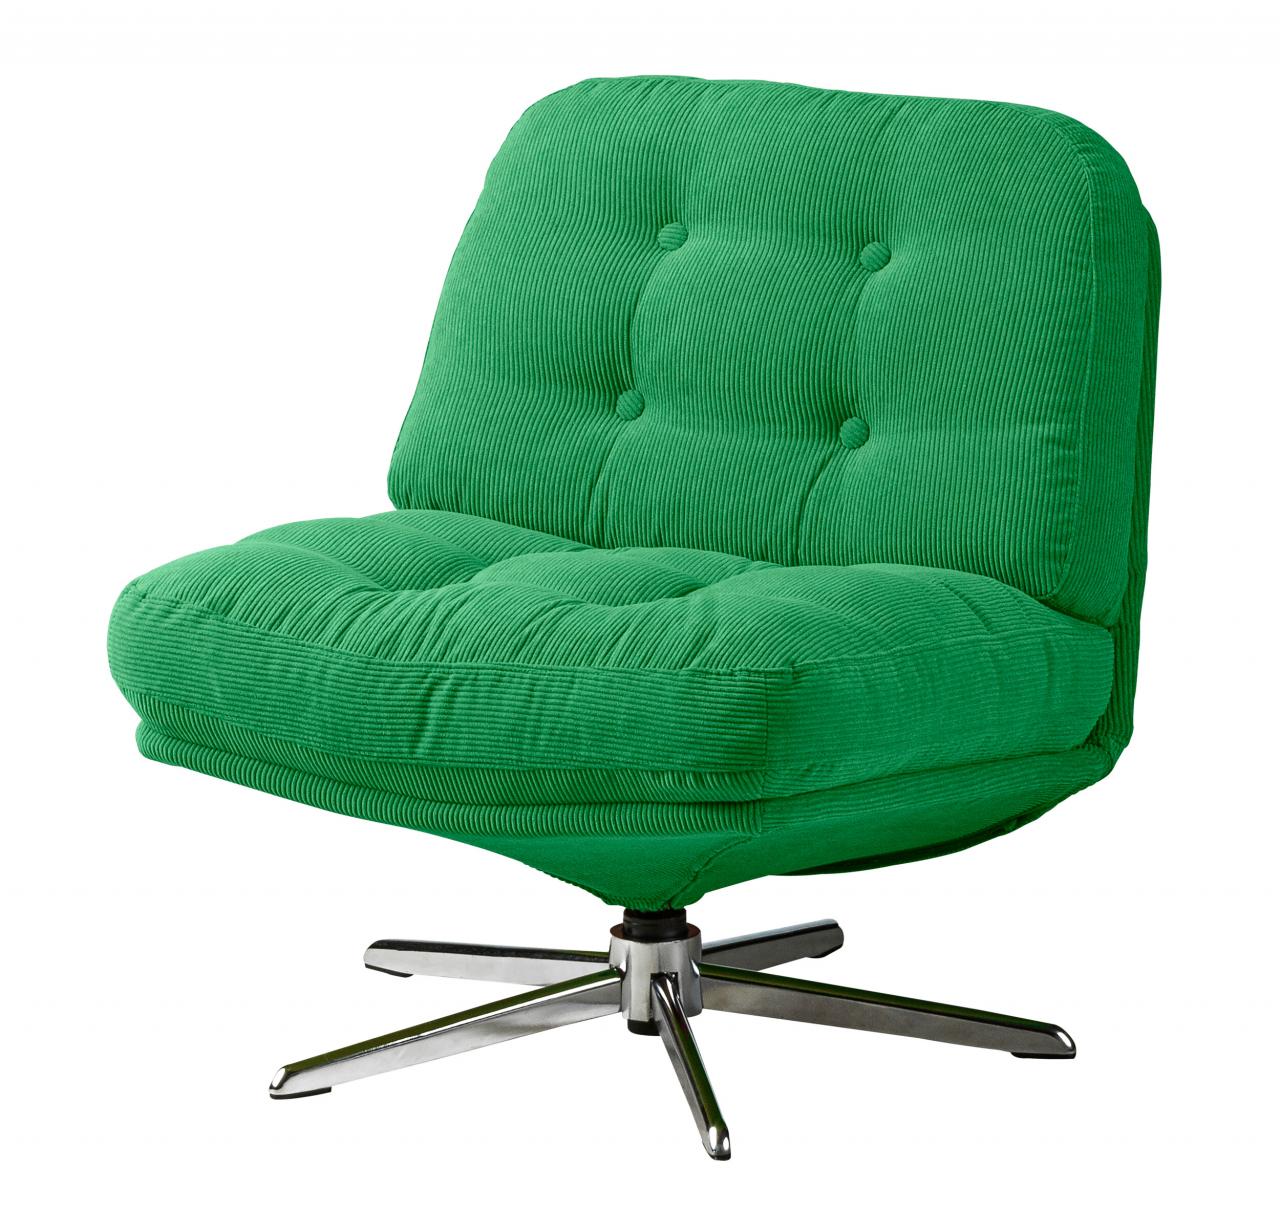 Gifgroene fauteuil - € 199 - Ikea.